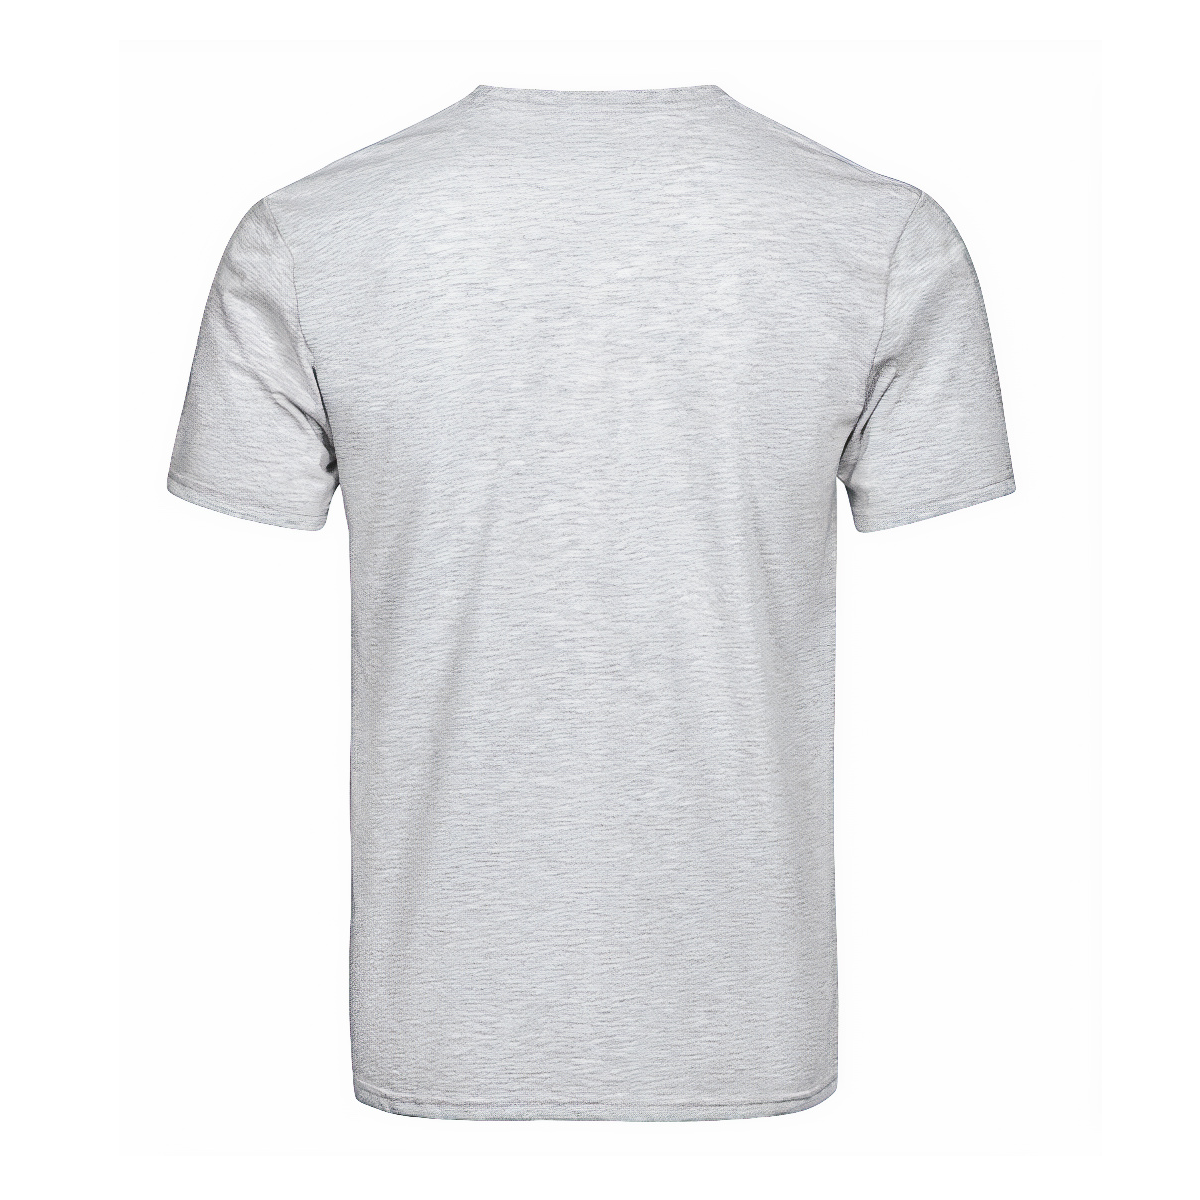 Sandilands Tartan Crest T-shirt - I'm not yelling style